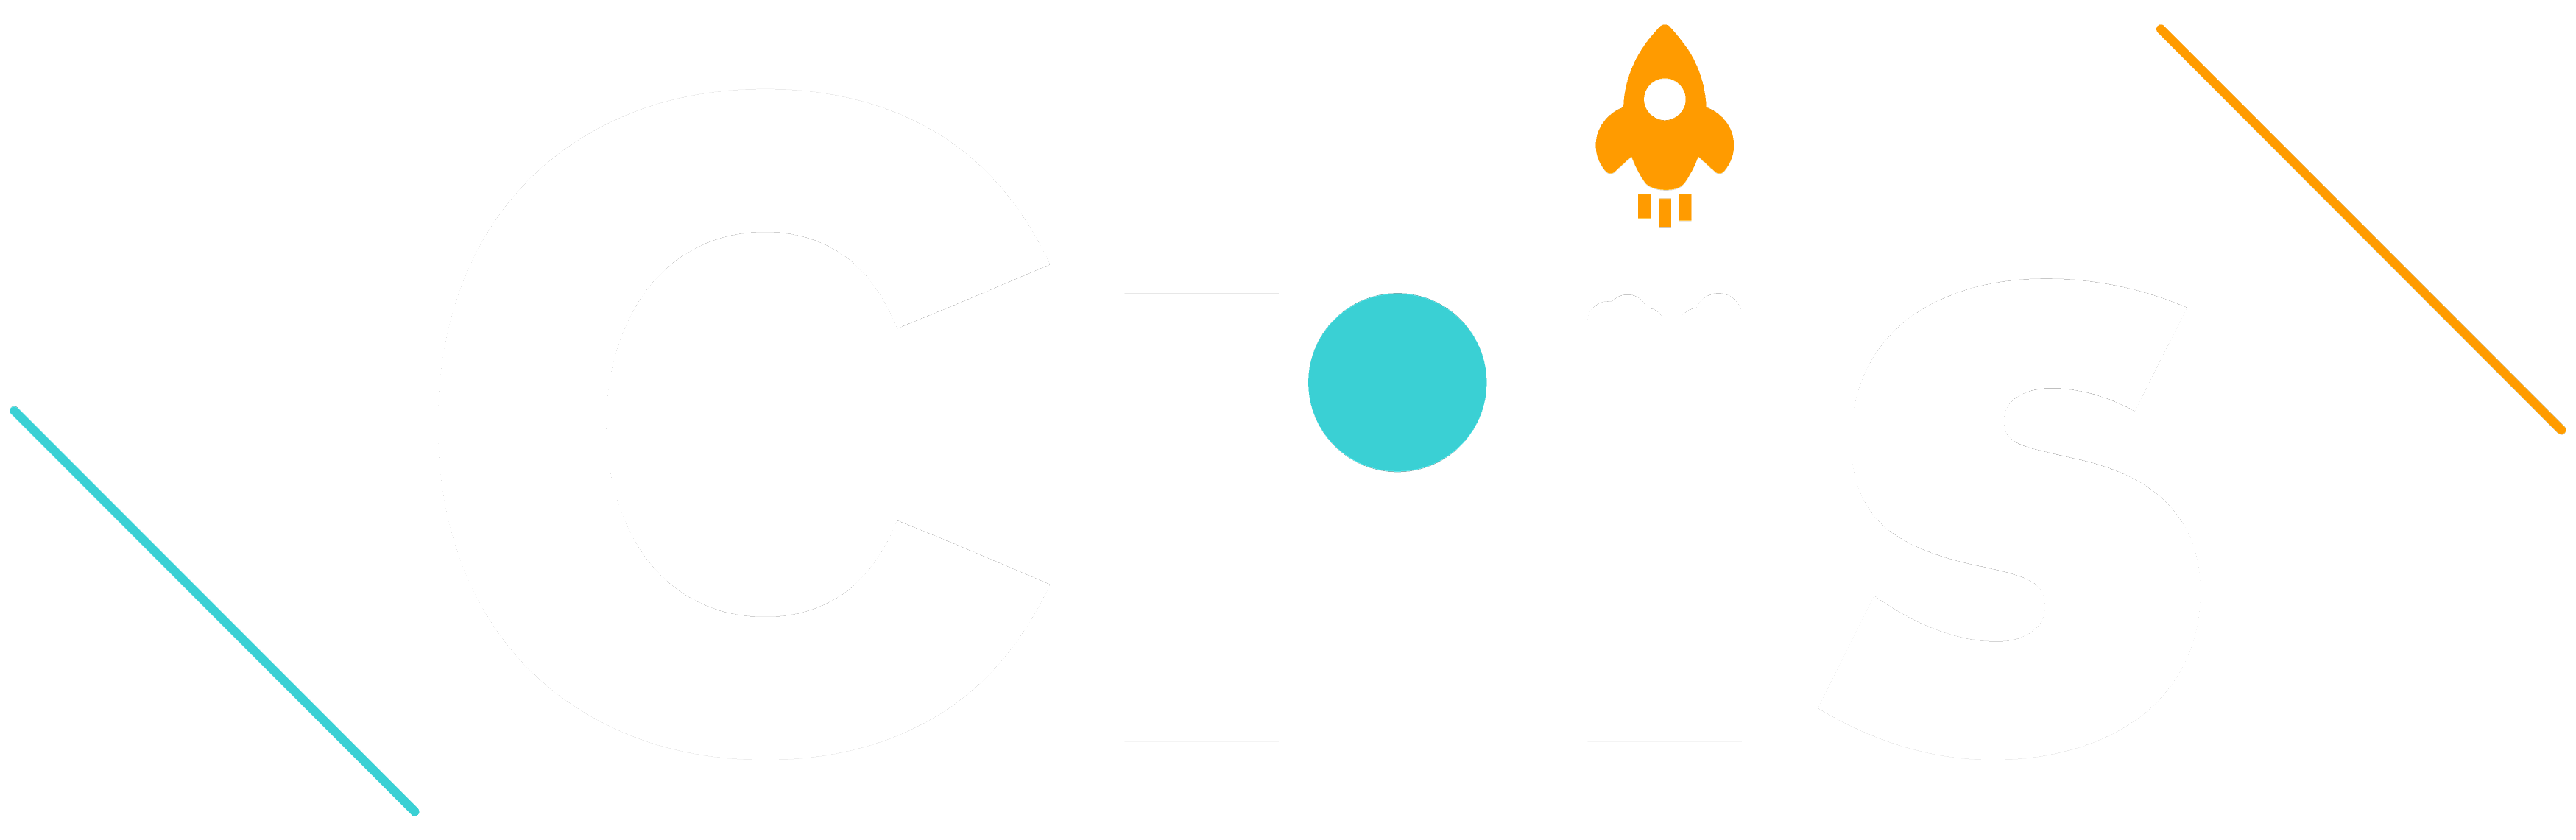 CRIS Learning Platform